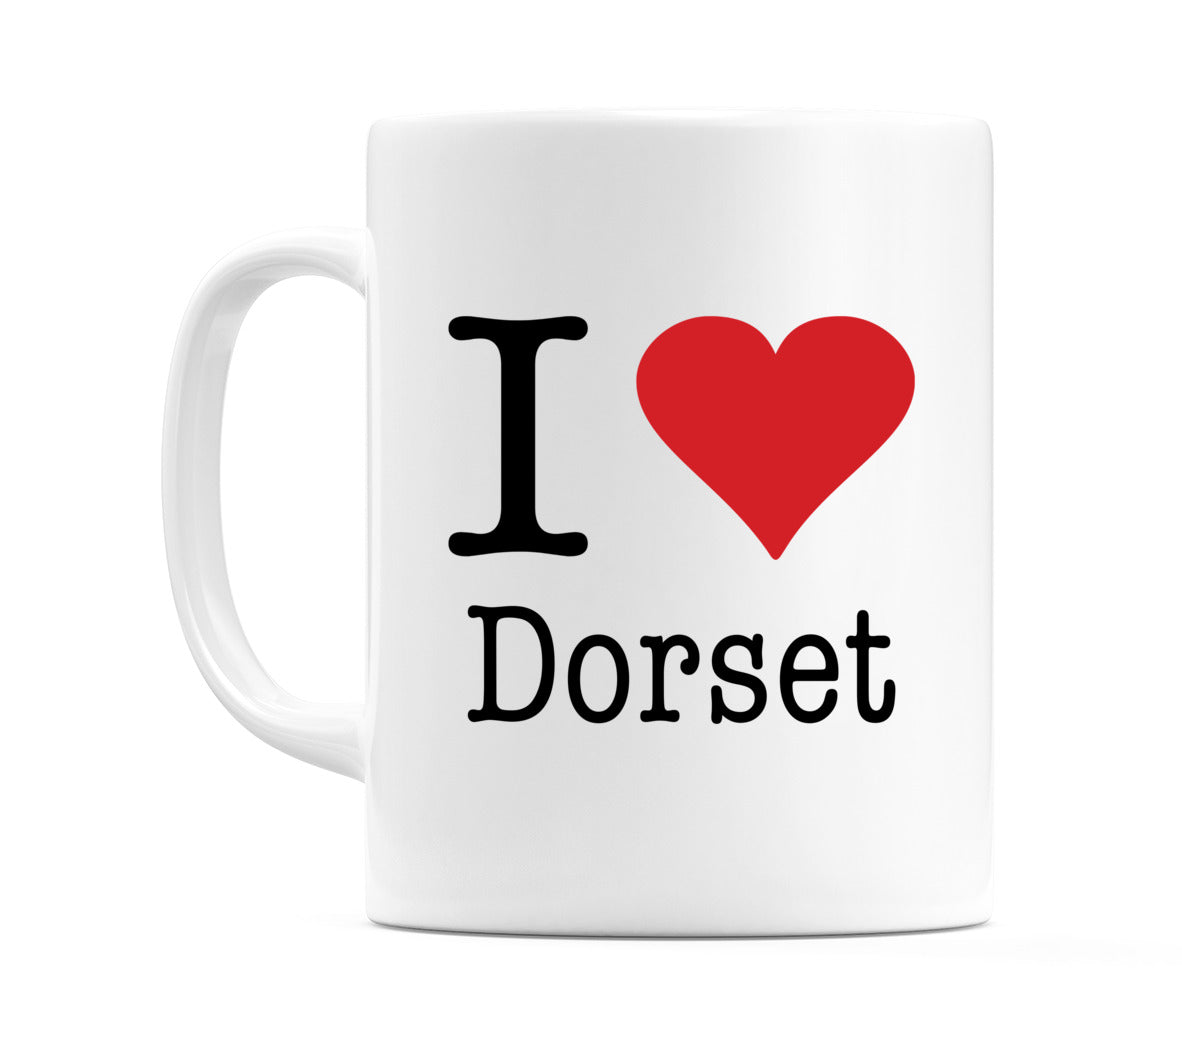 I Love Dorset Mug